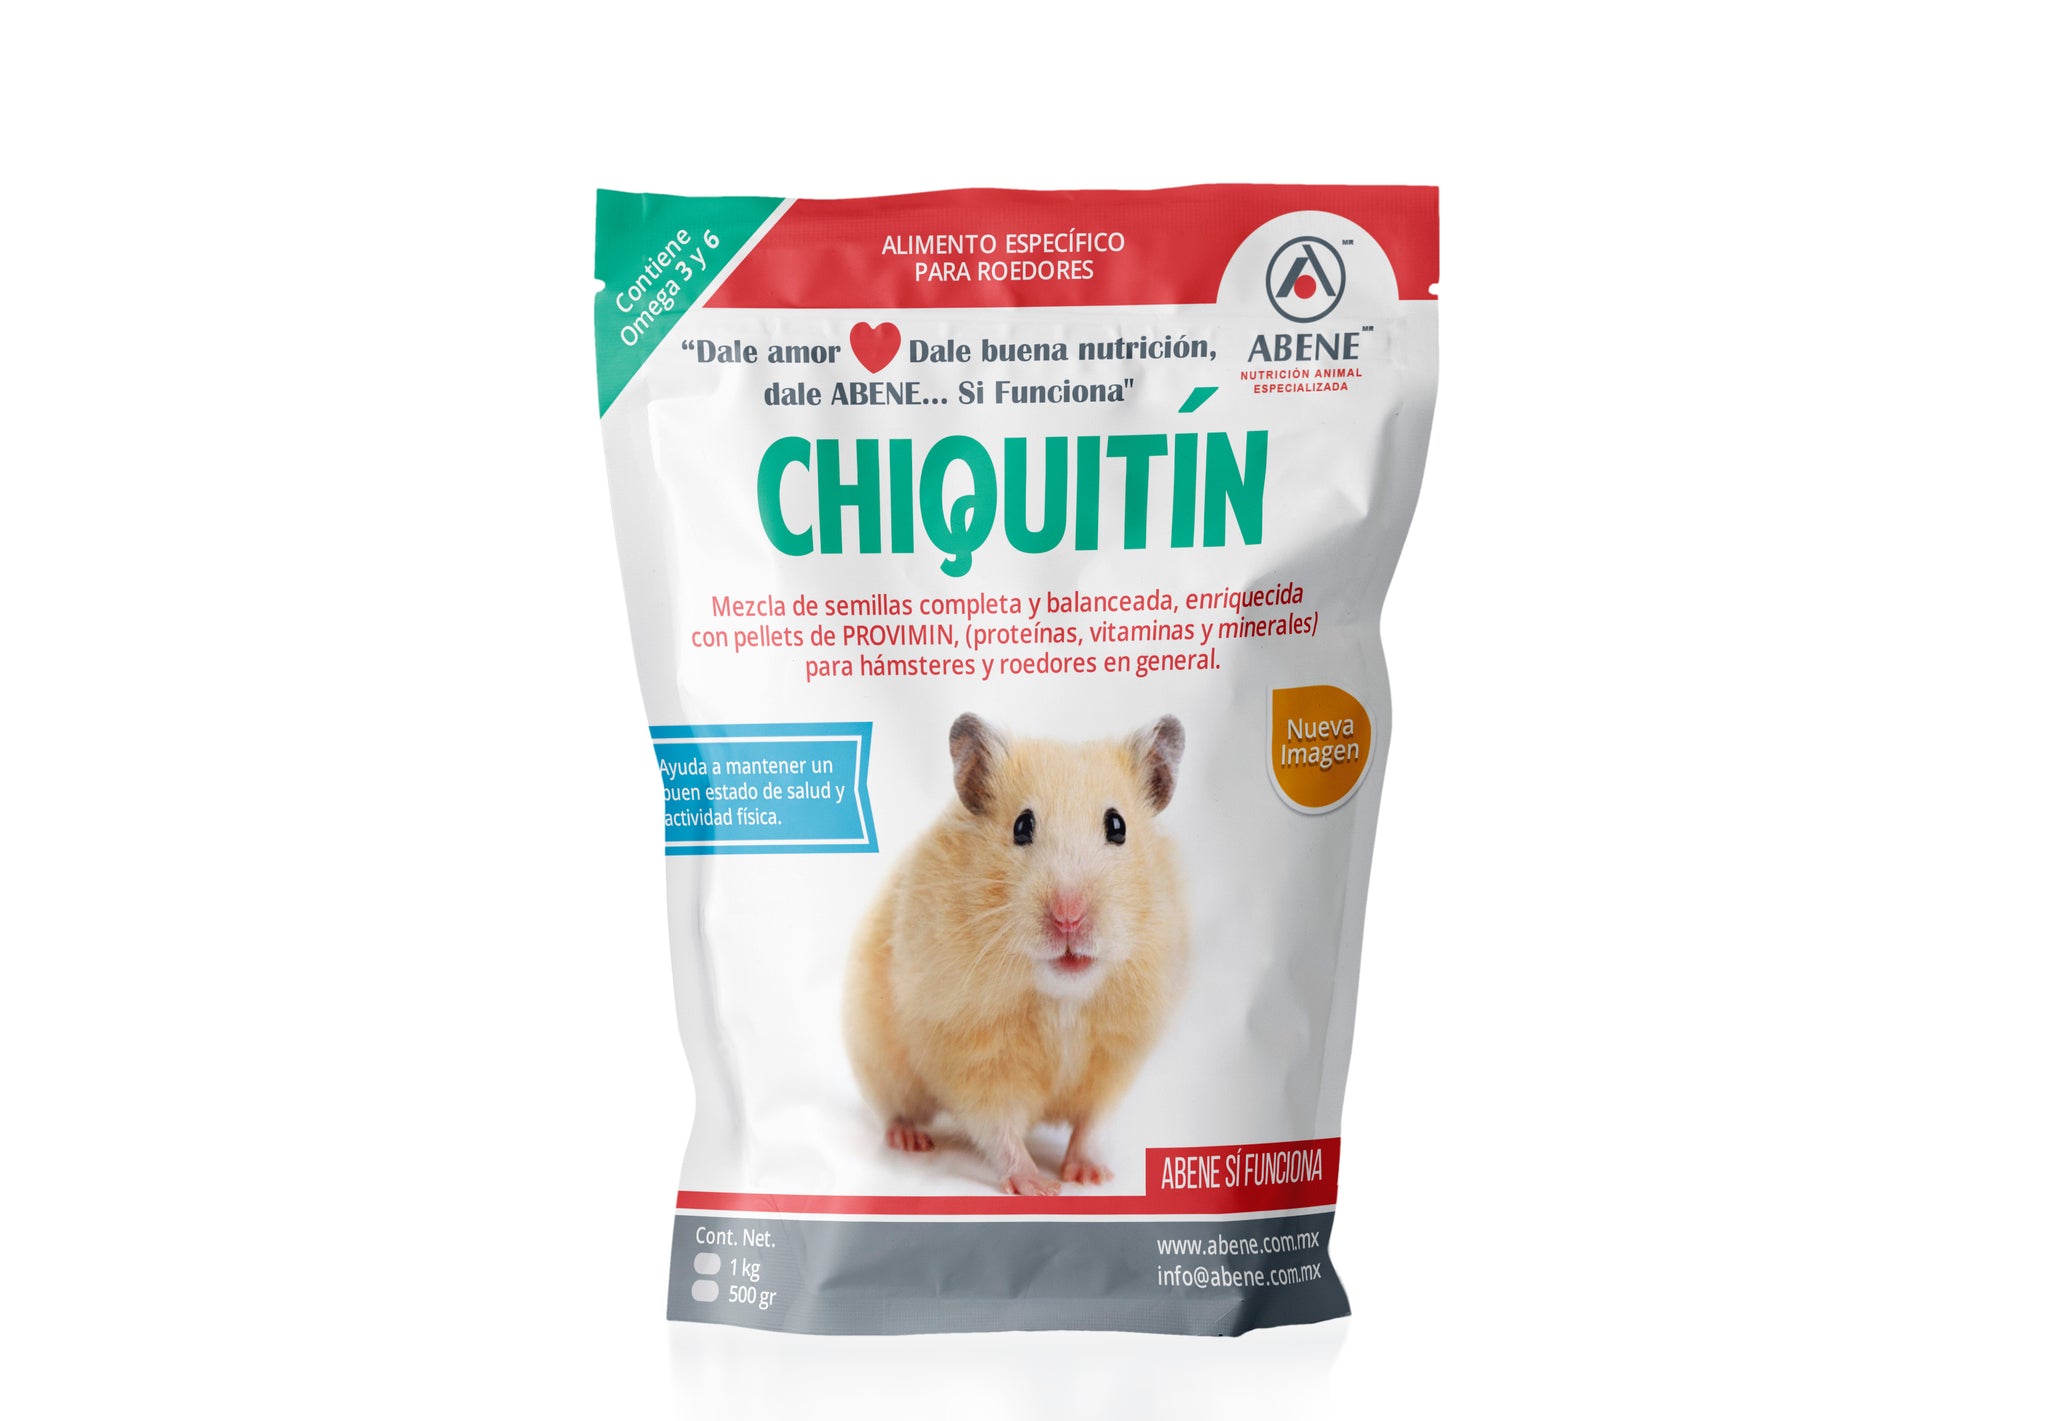 Chiquitín (mezcla de semillas para hámsteres, contiene pellets de PROVIMIN es decir: Es la mezcla peletizada de PROteinas + Vitaminas + Minerales)